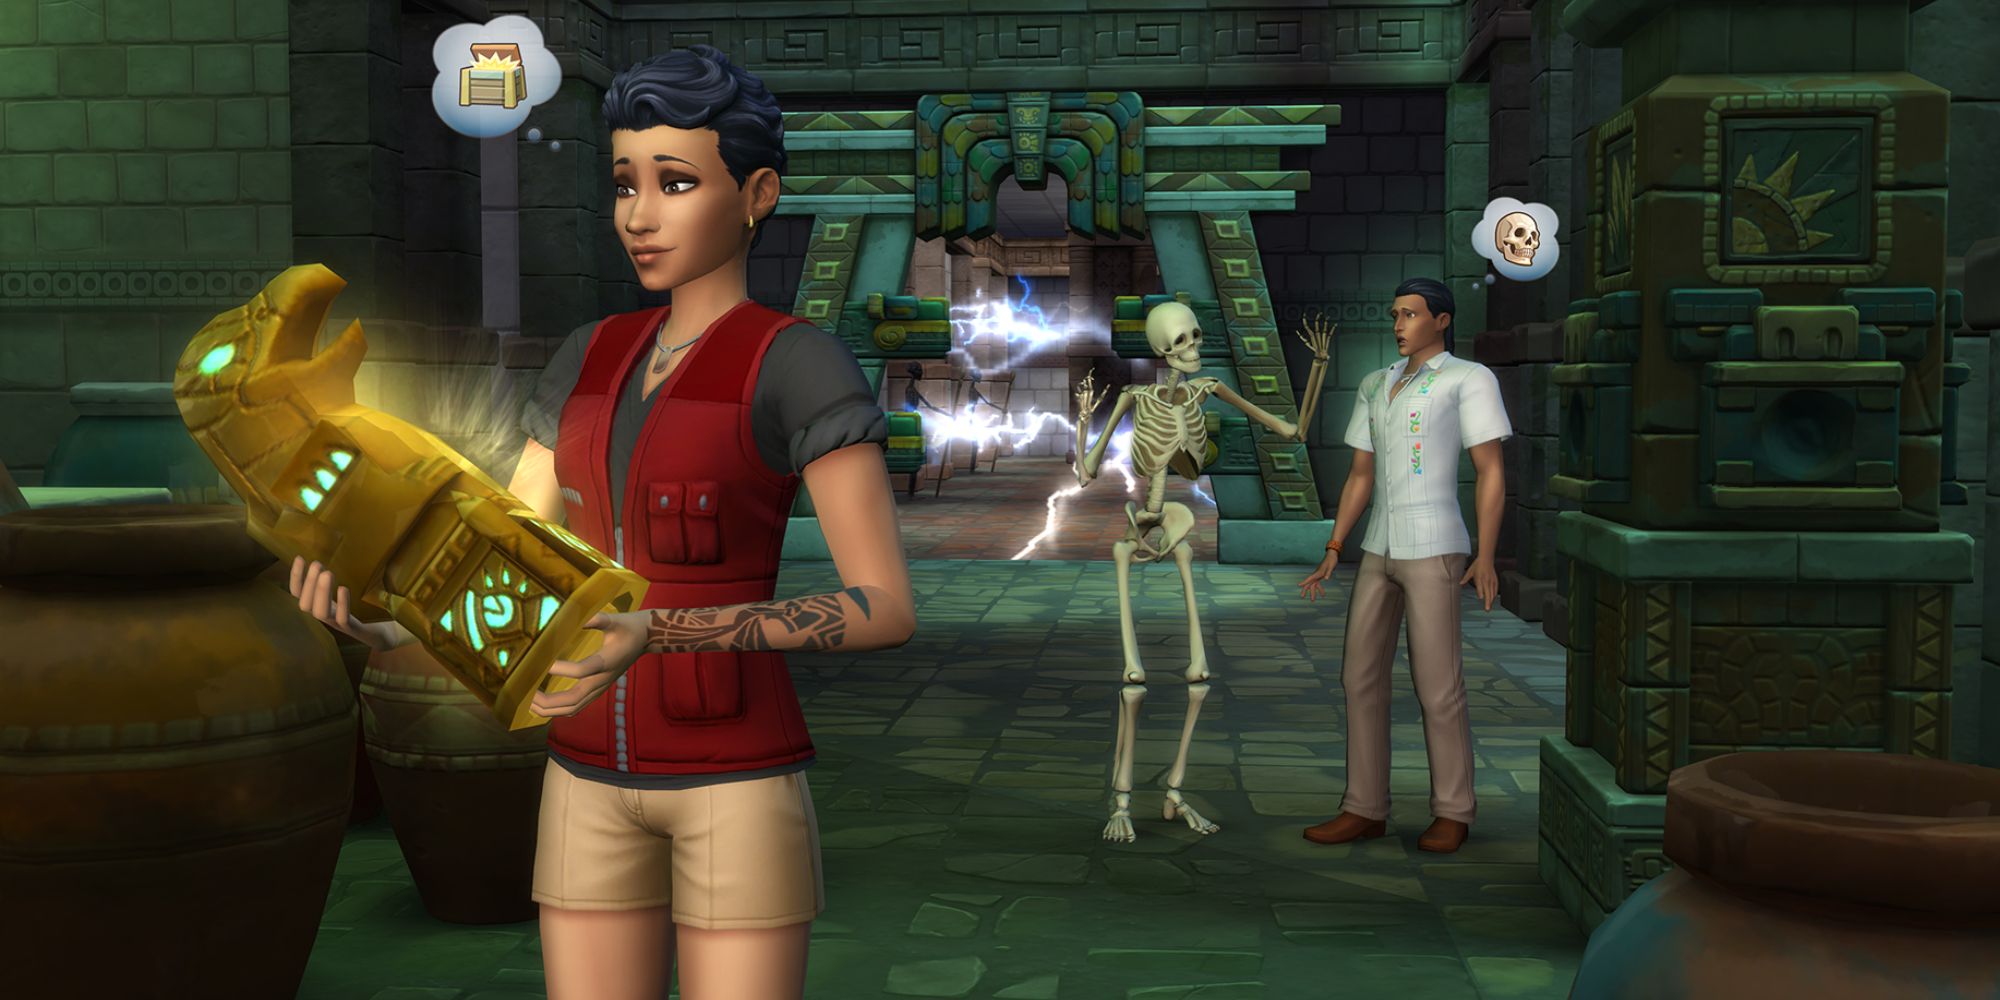 Sims 4 jungle adventure in a temple